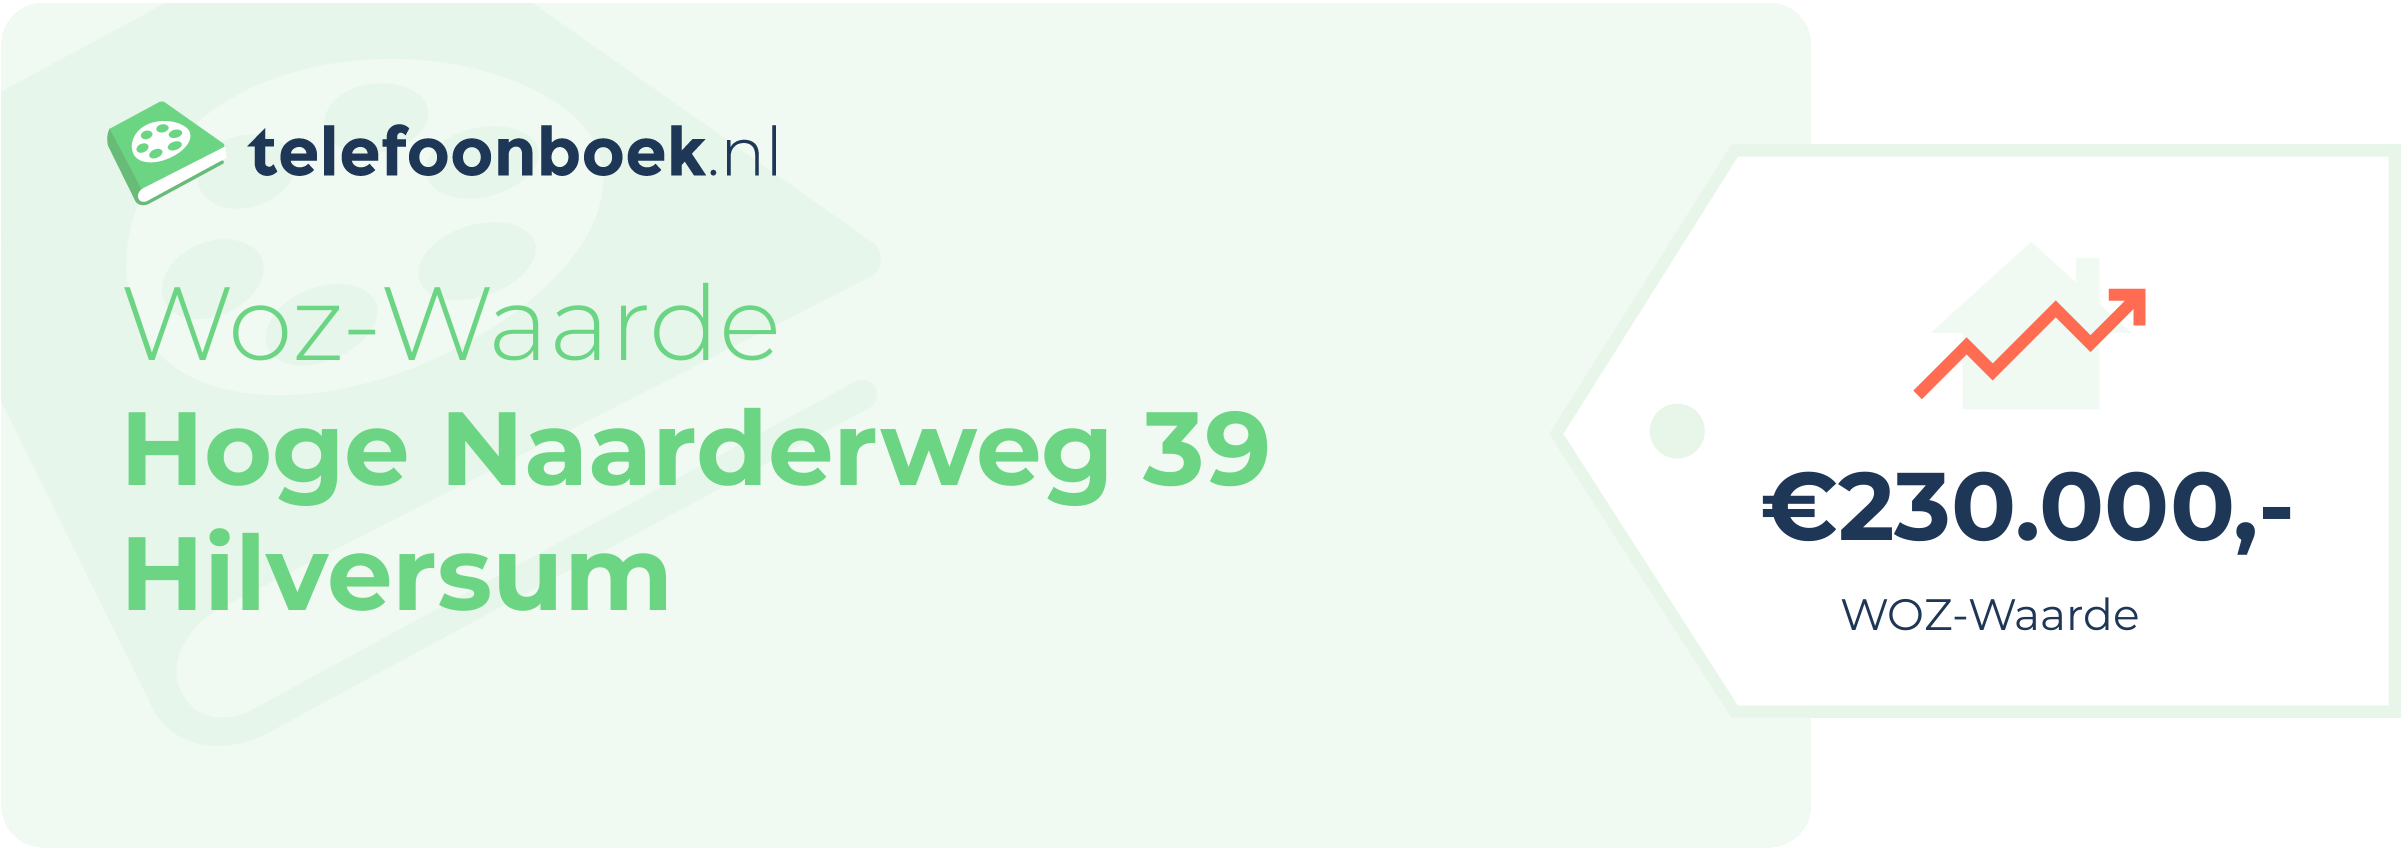 WOZ-waarde Hoge Naarderweg 39 Hilversum